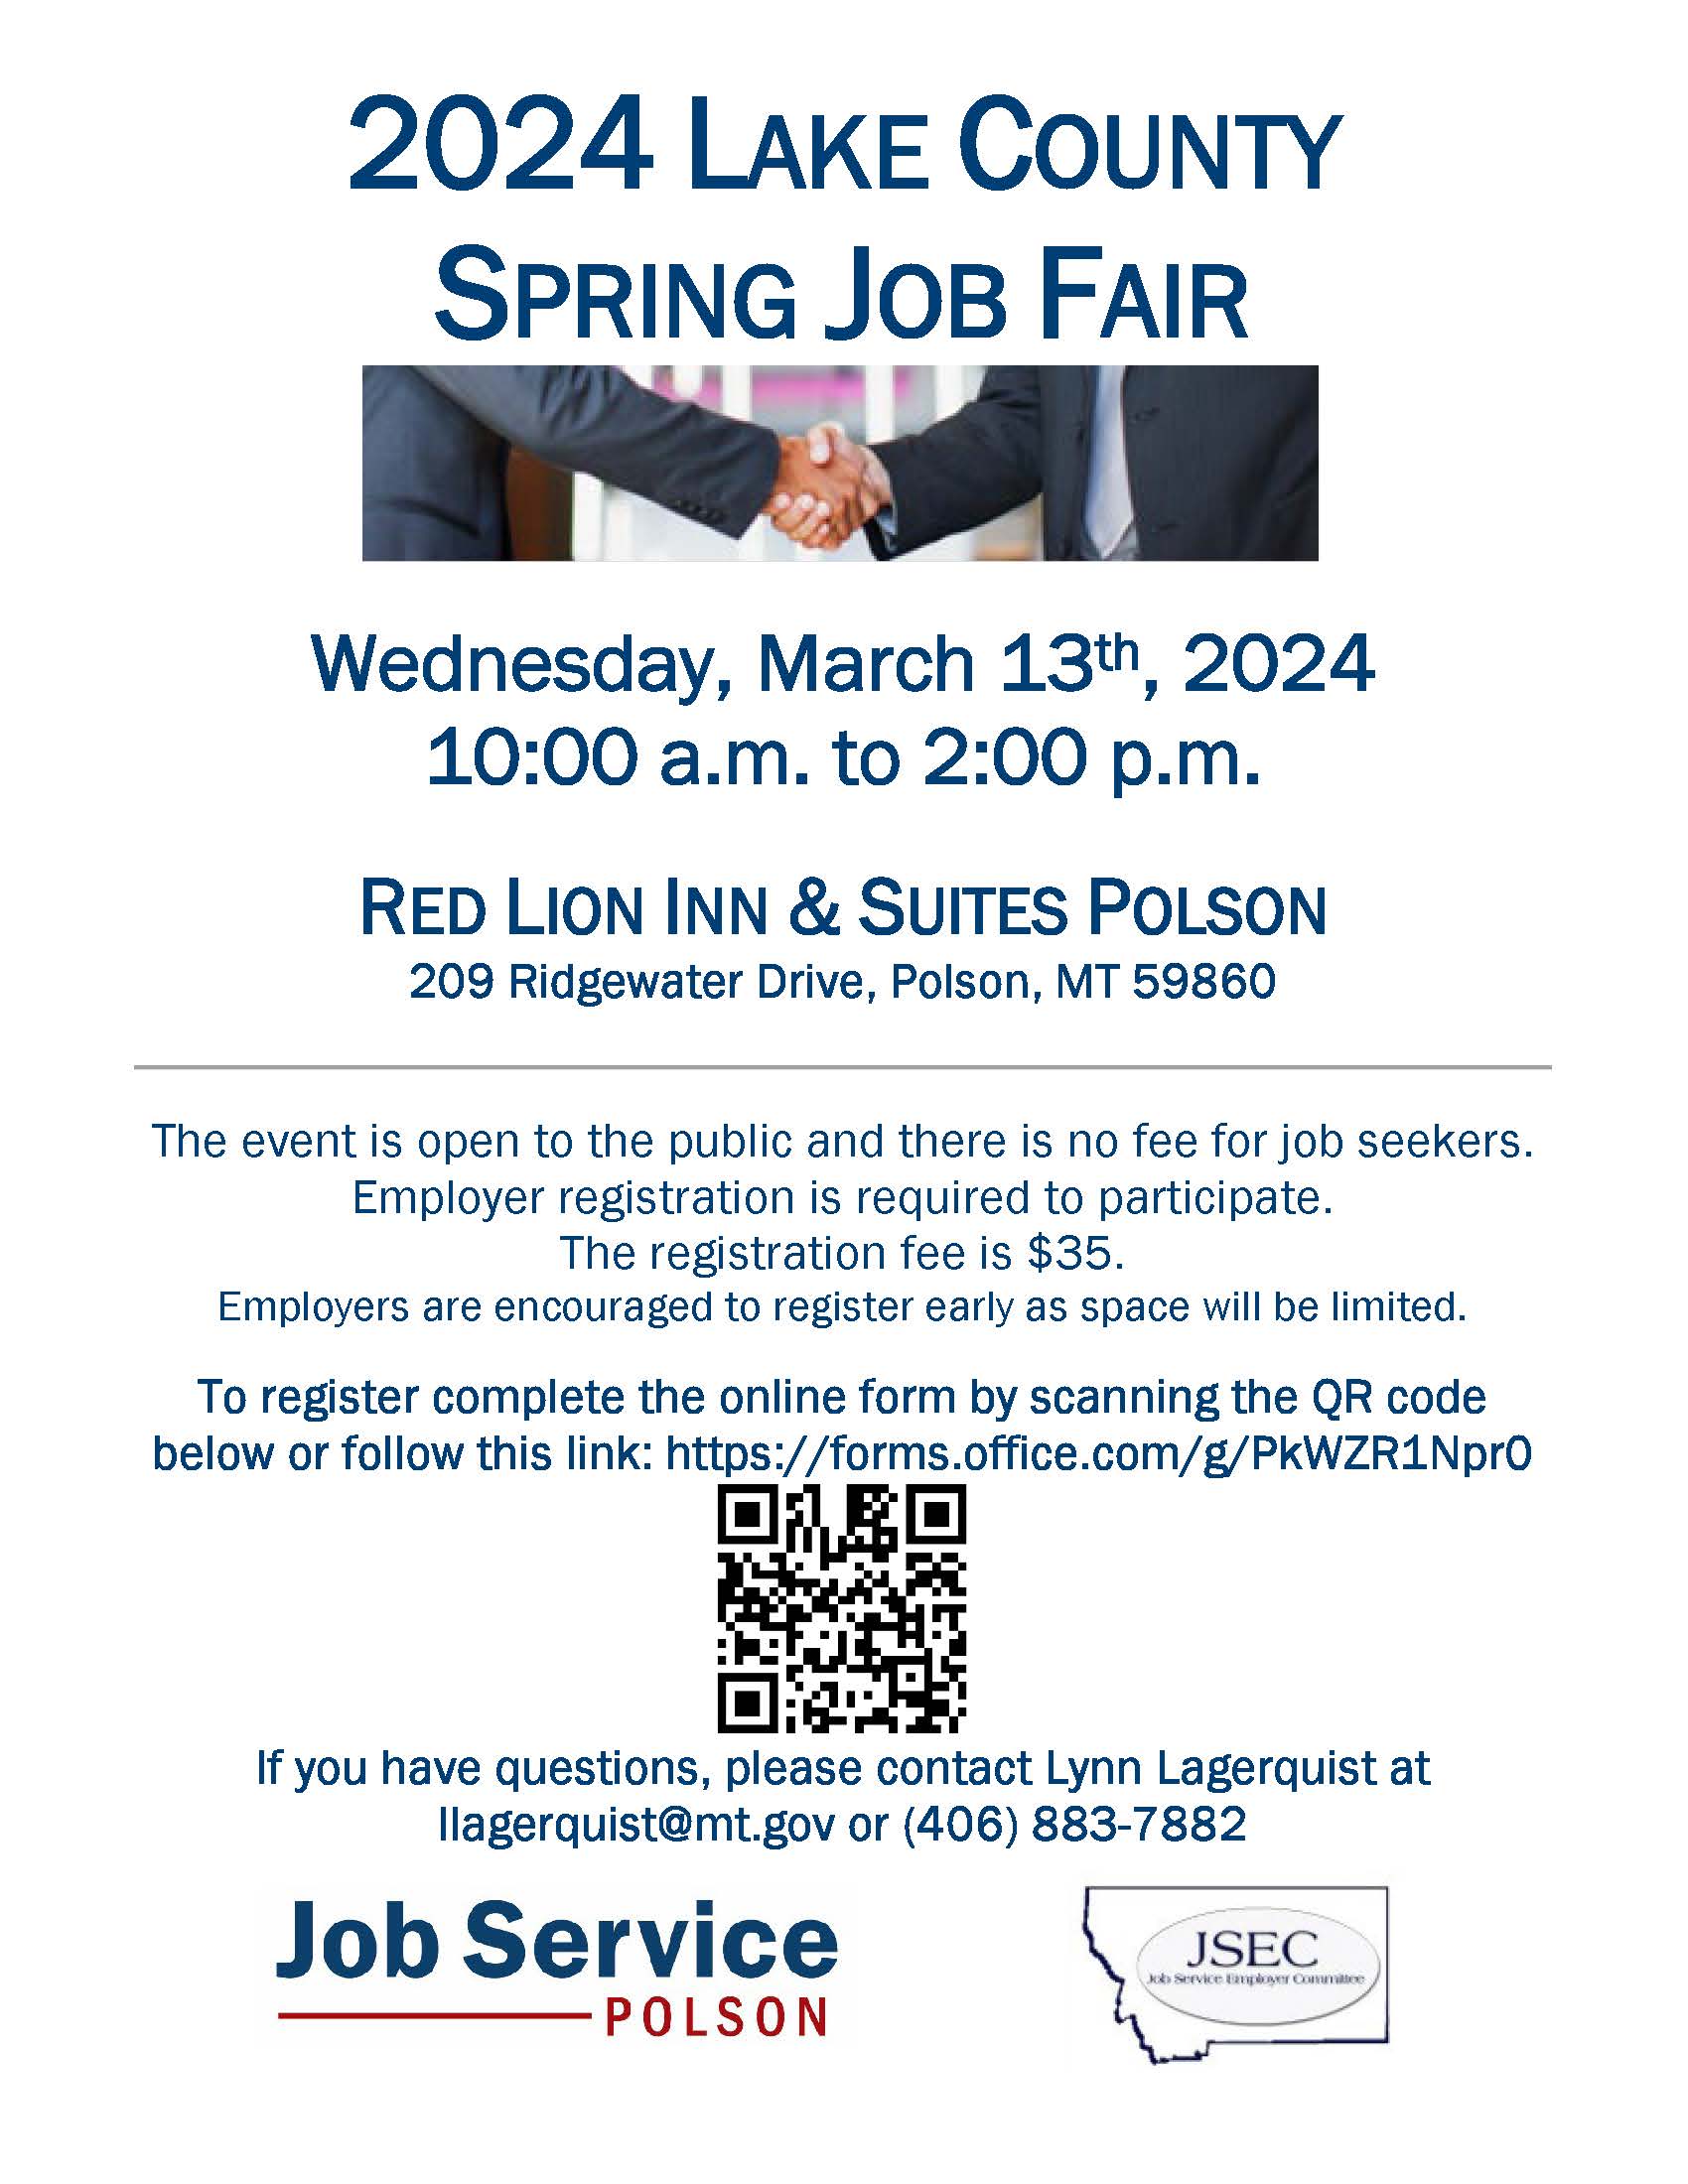 Polson - Lake County Spring Job Fair